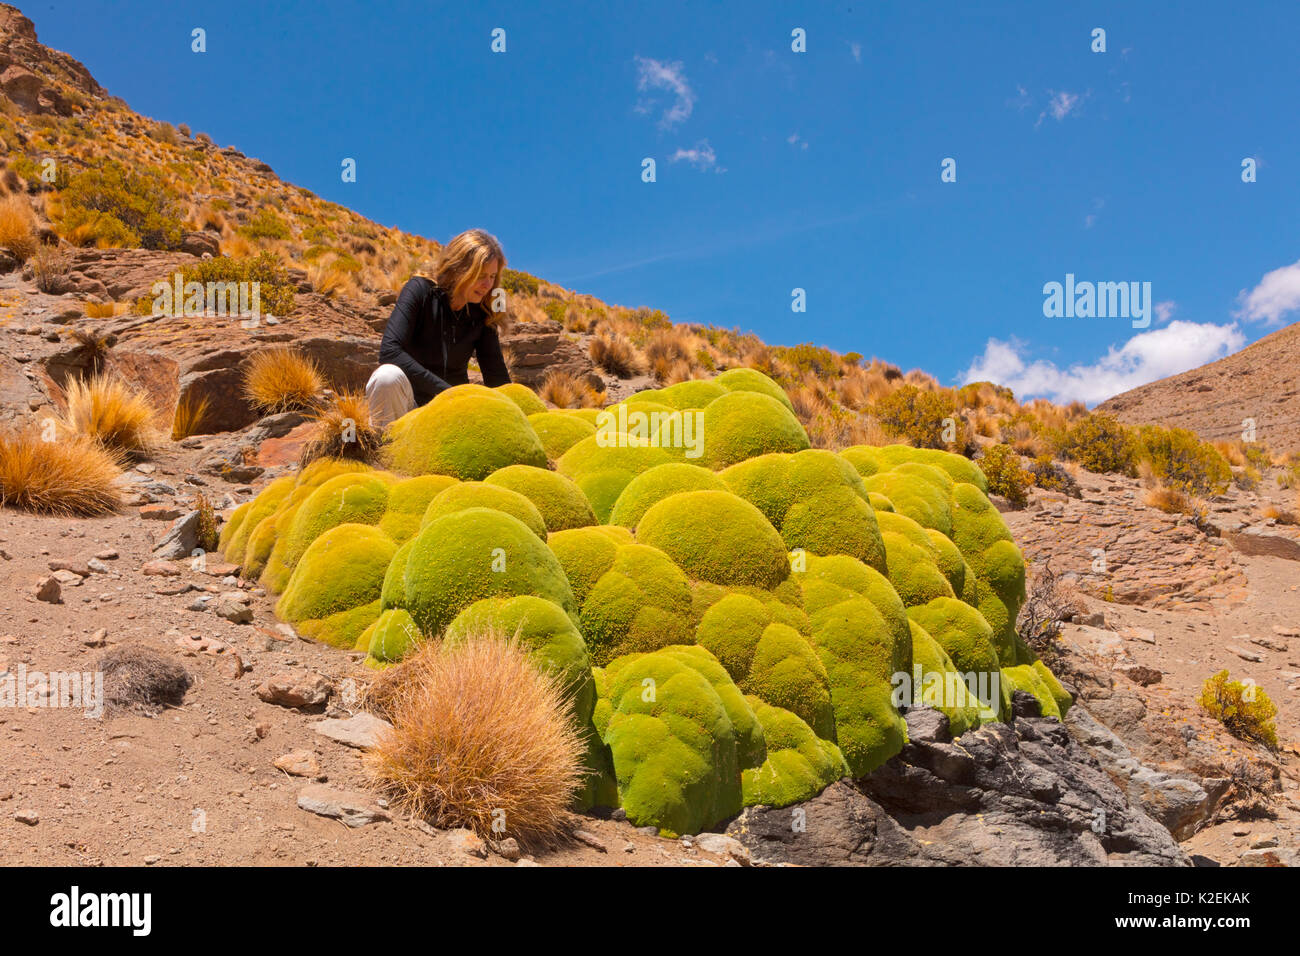 Woman looking at Giant cushion plant (Azorella compacta). Bolivia. Stock Photo